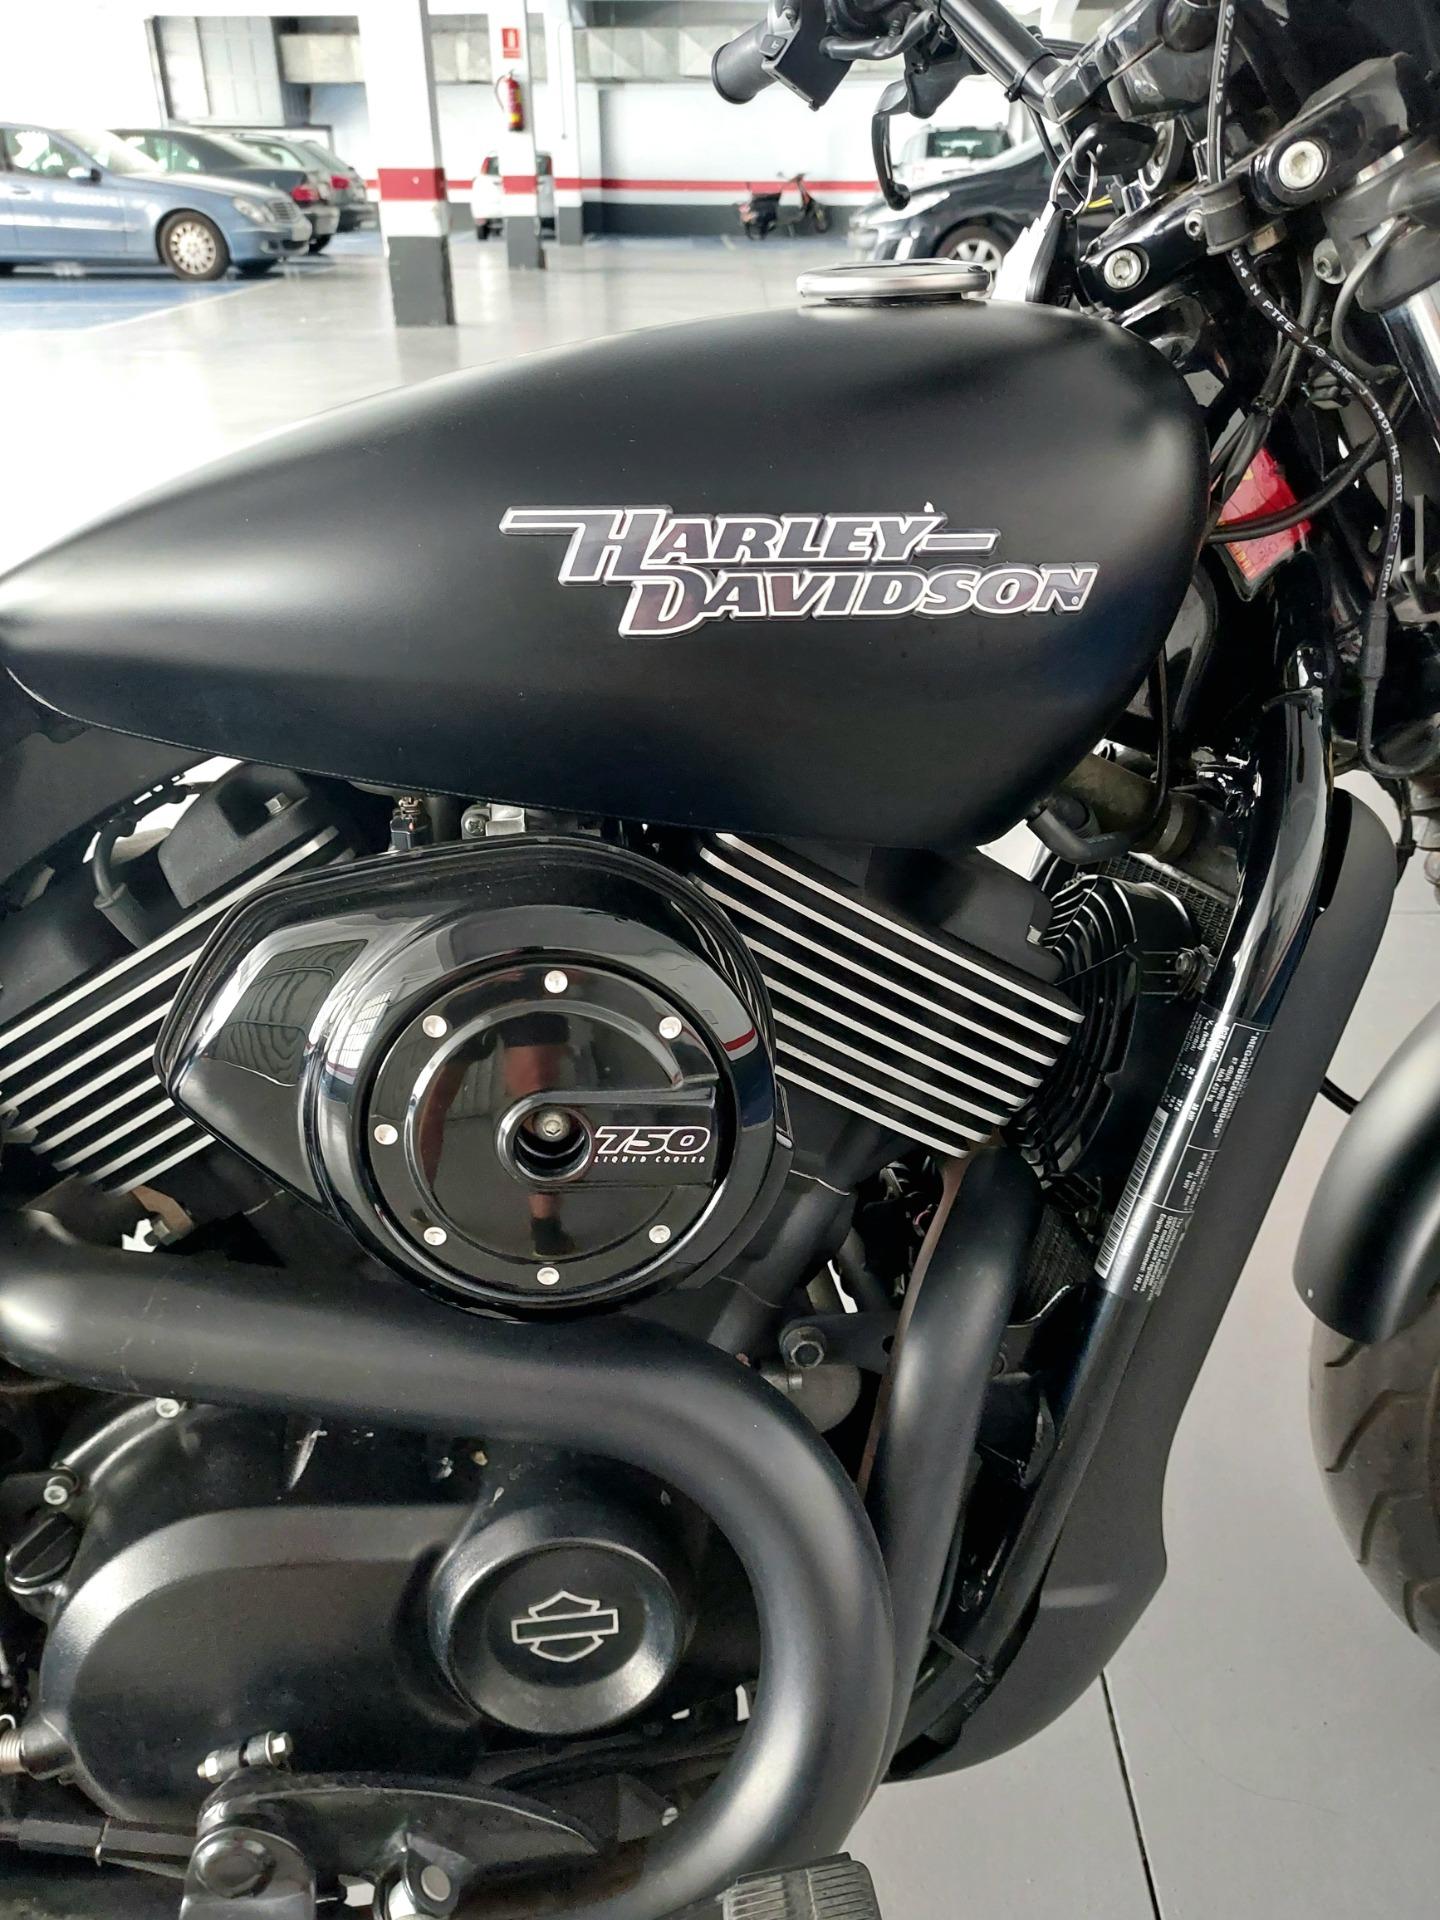 Foto 3 de Harley Davidson stret 750 por ducati monster 797 